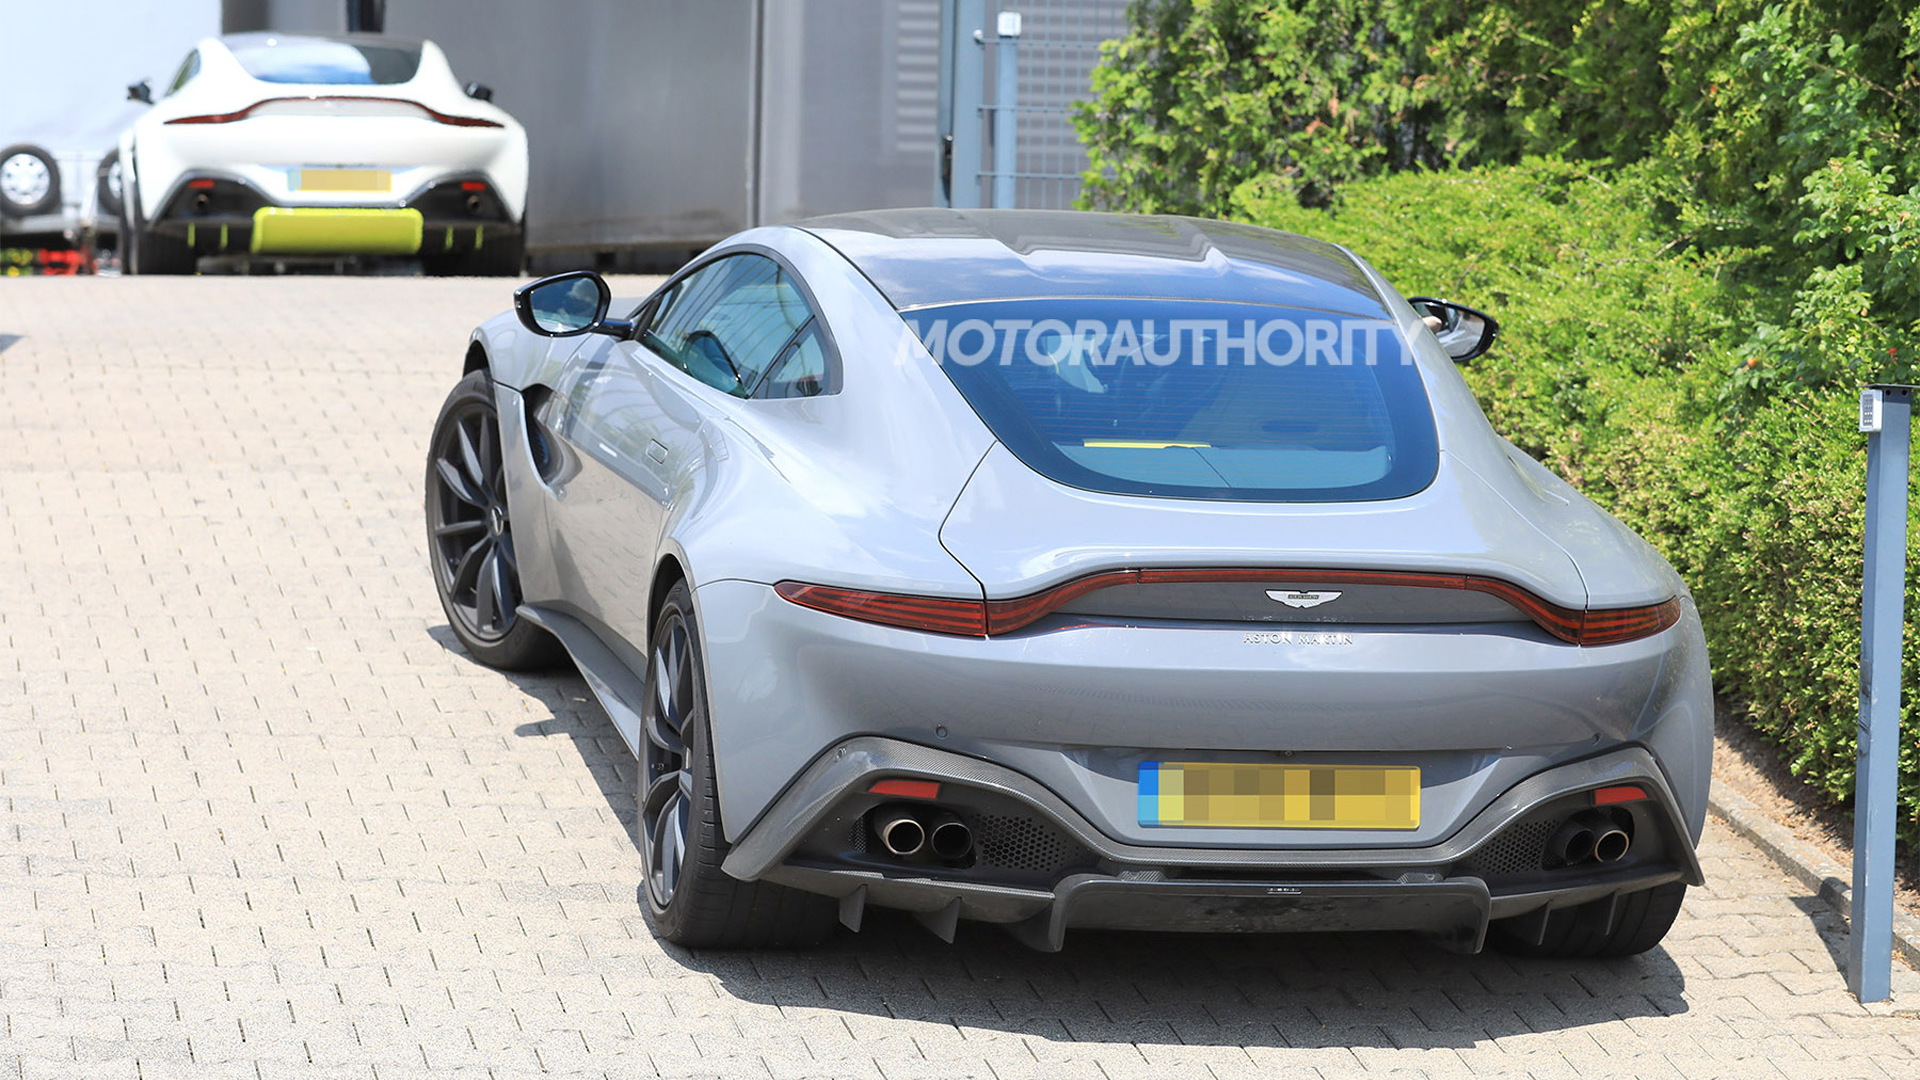 2020 Aston Martin Vantage test mule spy shots - Image via S. Baldauf/SB-Medien